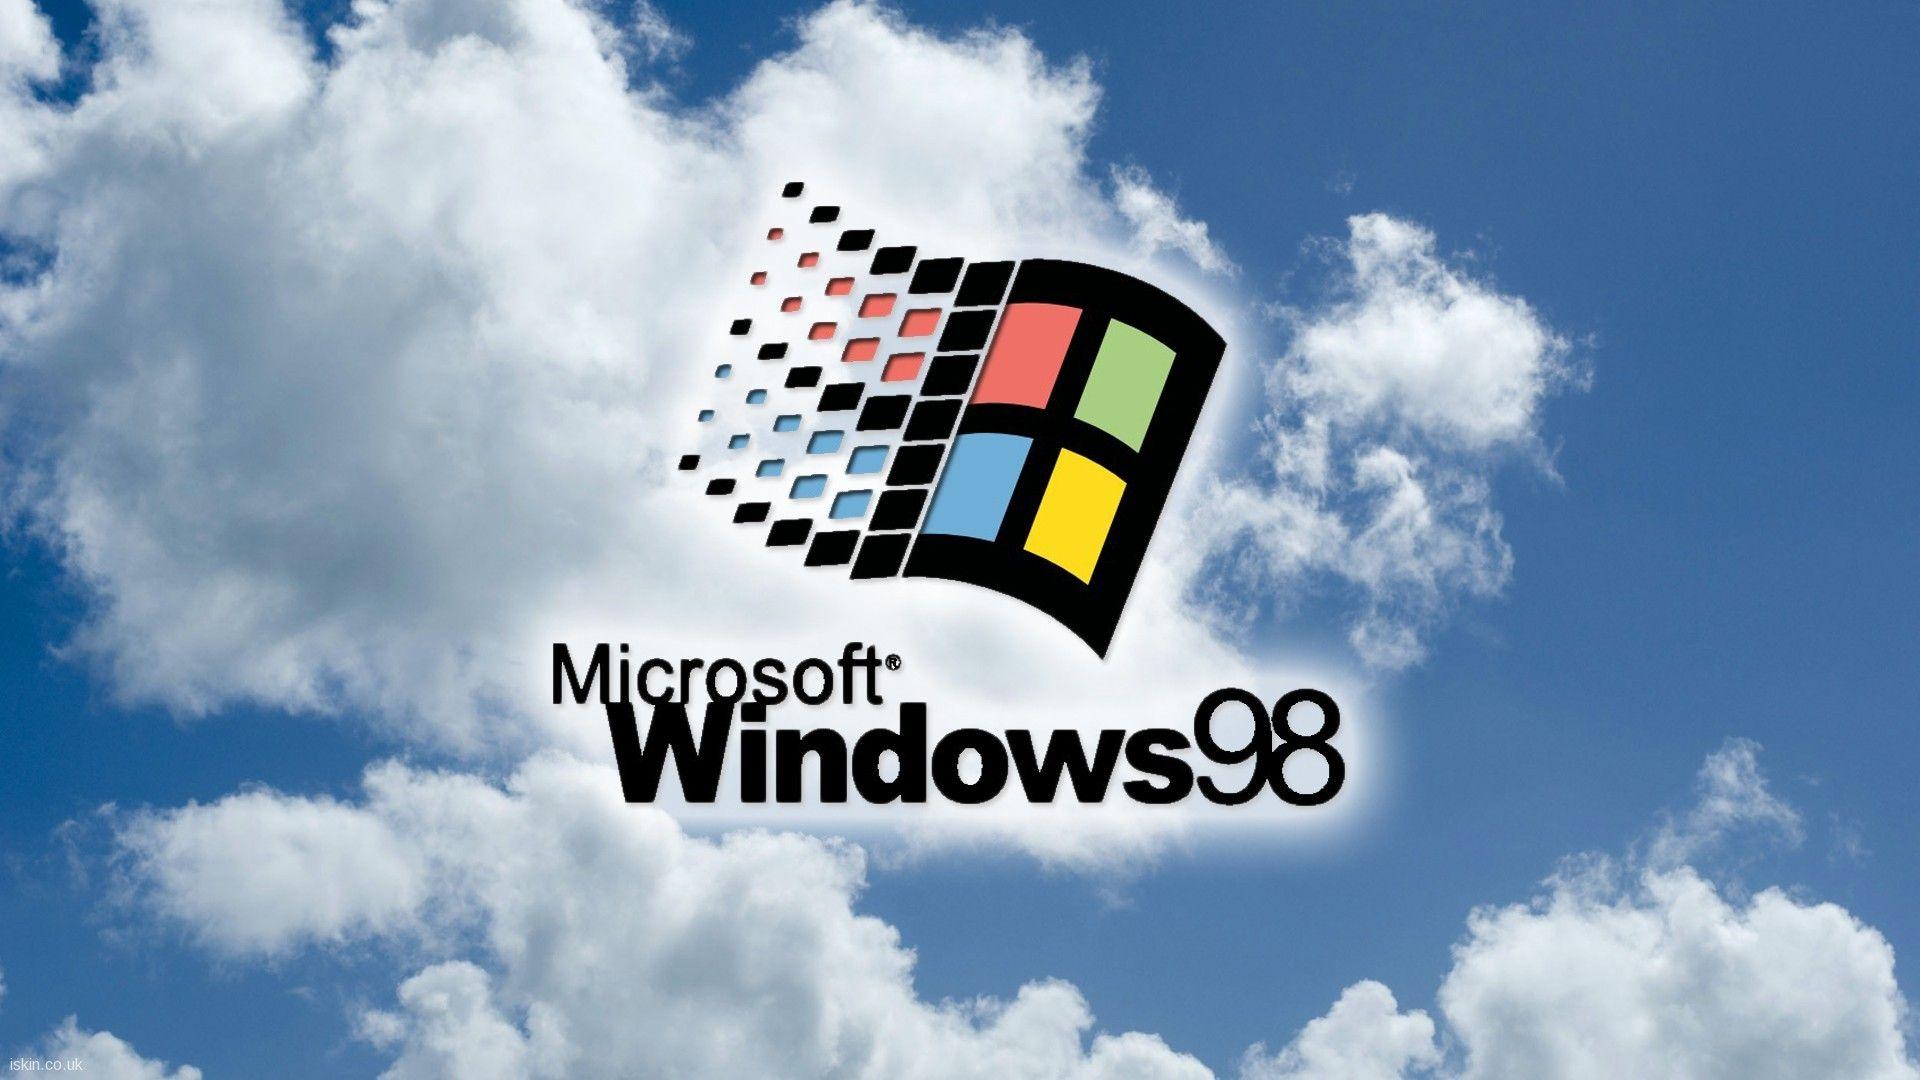 Microsoft Windows 98 Logo - Wallpaper : sky, logo, vintage, Microsoft Windows, brand, 90s